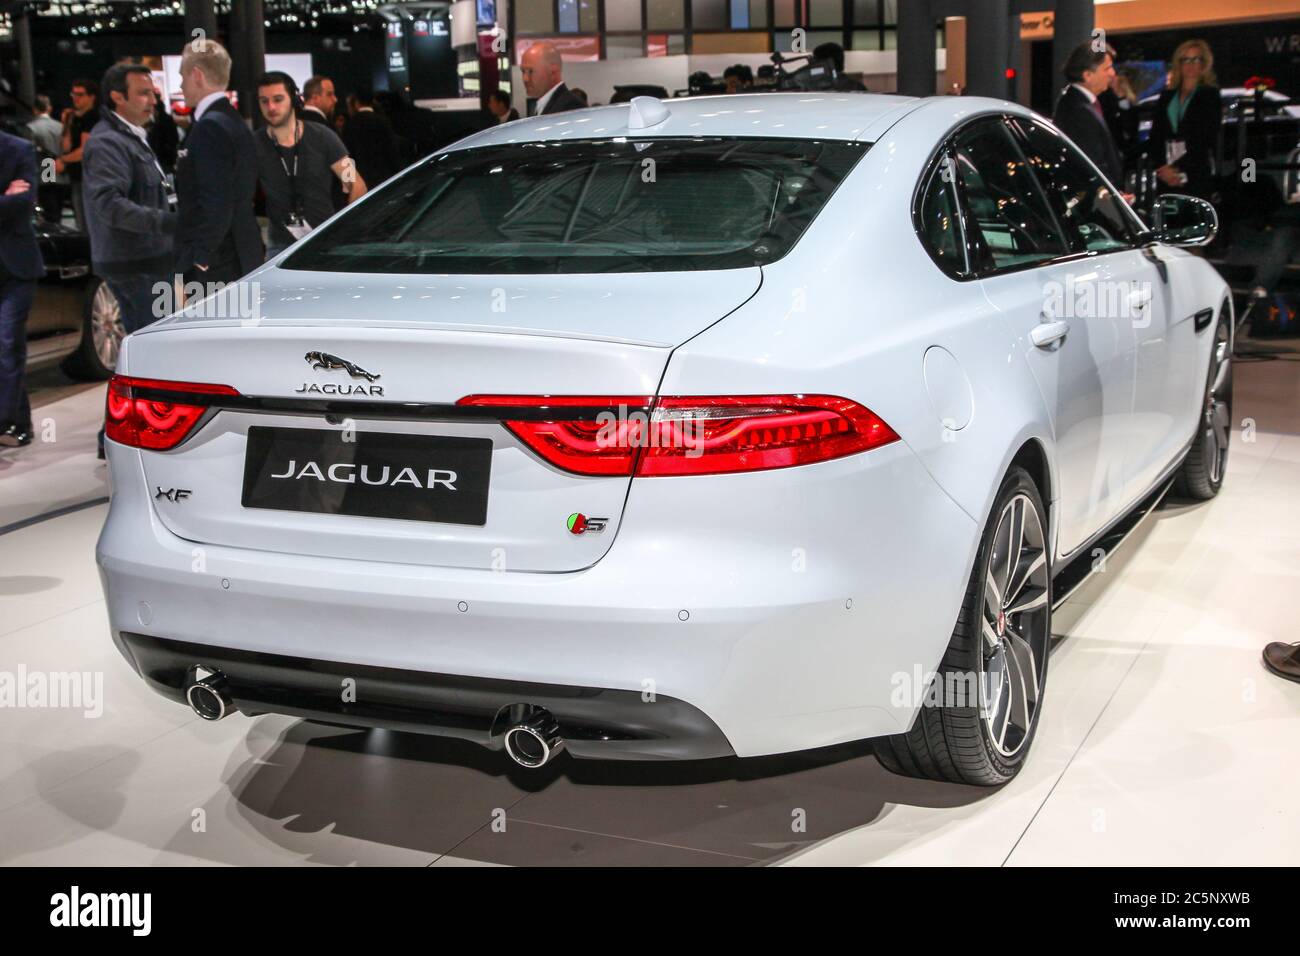 Jaguar xf 2015 hi-res stock photography and images - Alamy